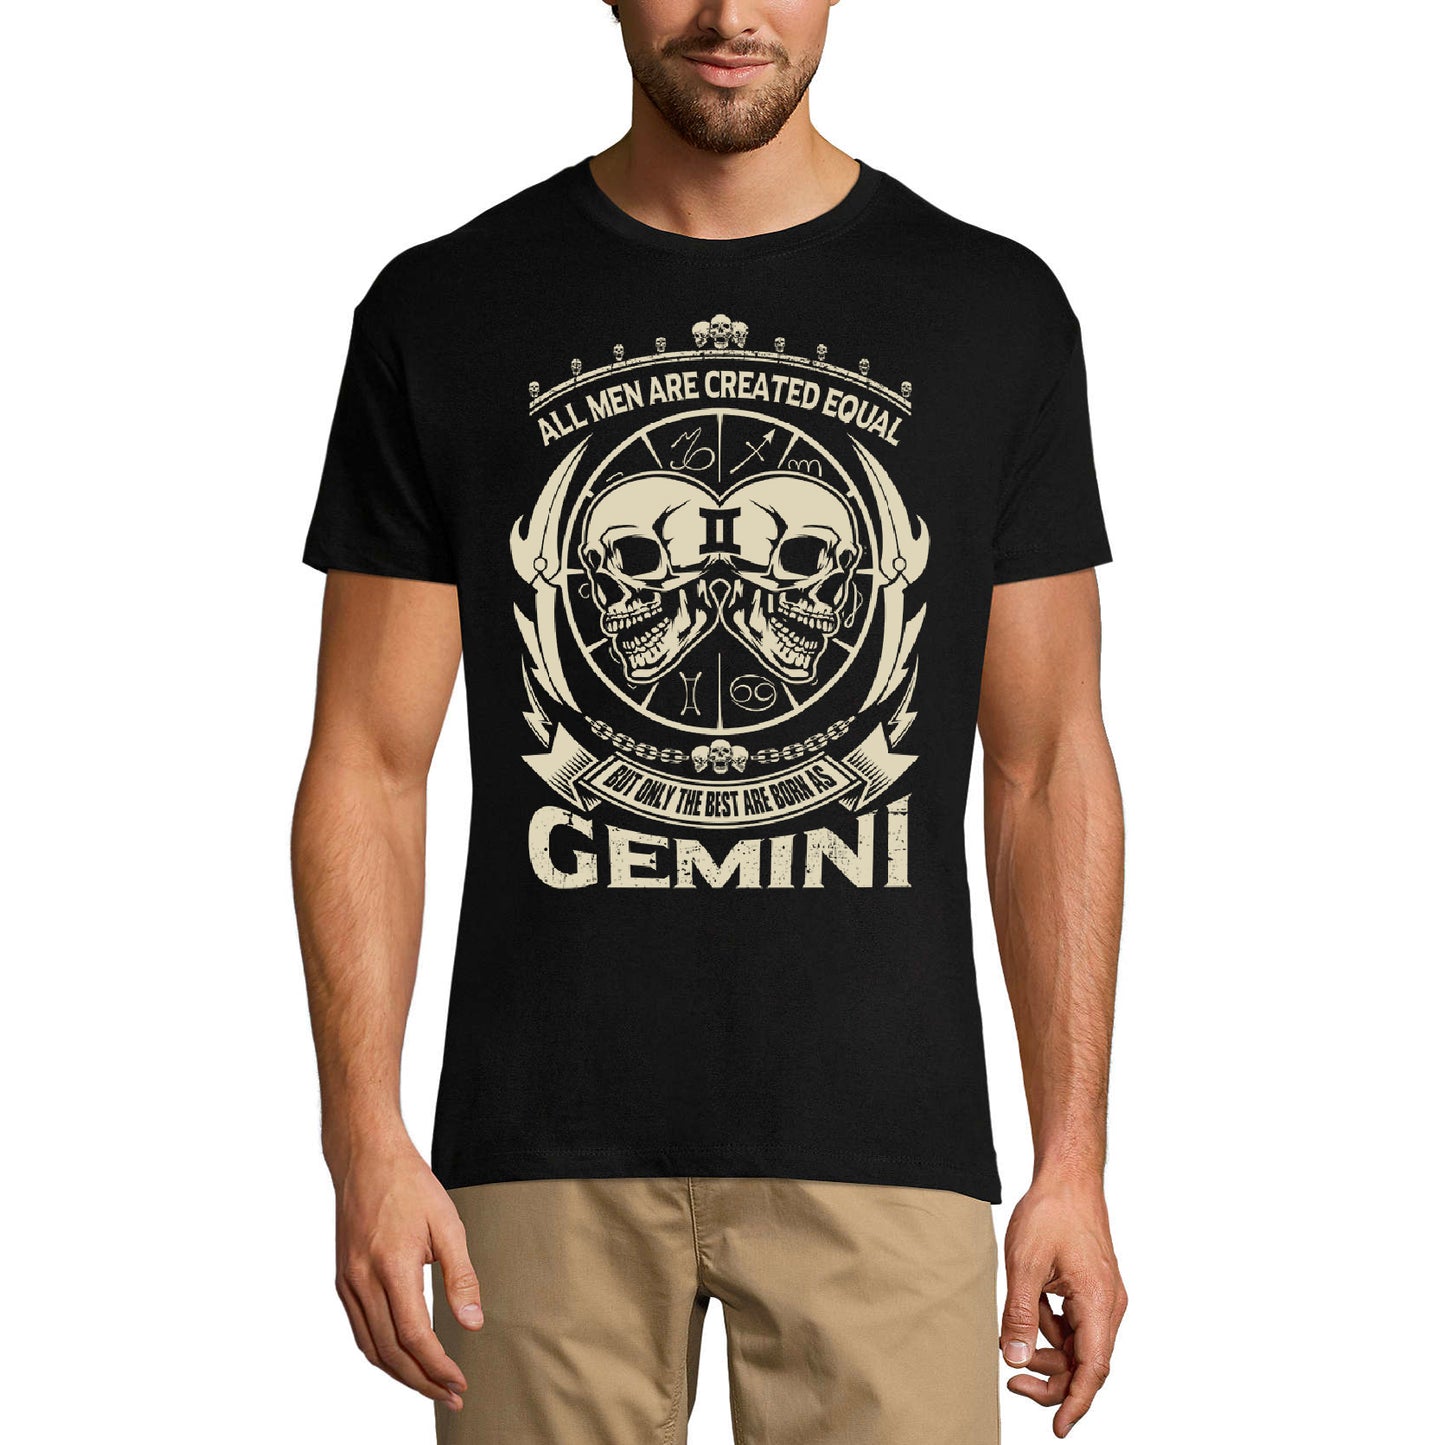 ULTRABASIC Men's T-Shirt Only the Best are Born as Gemini - Birthday Funny Shirt